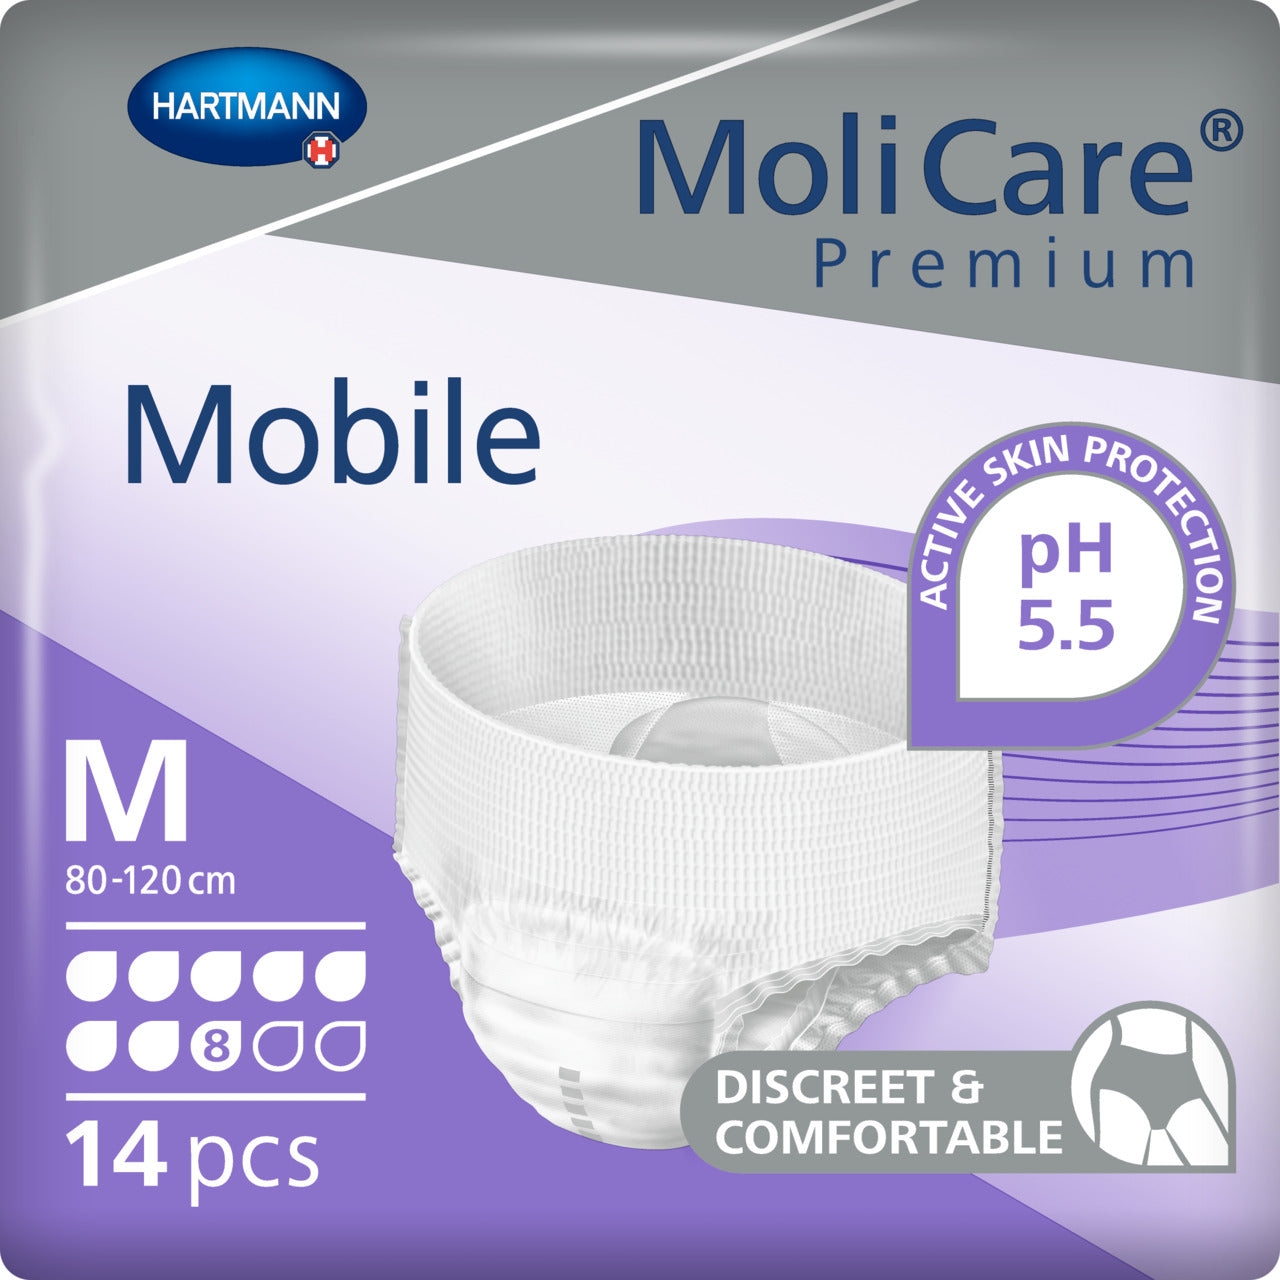 MoliCare Premium Mobile 8 Drop